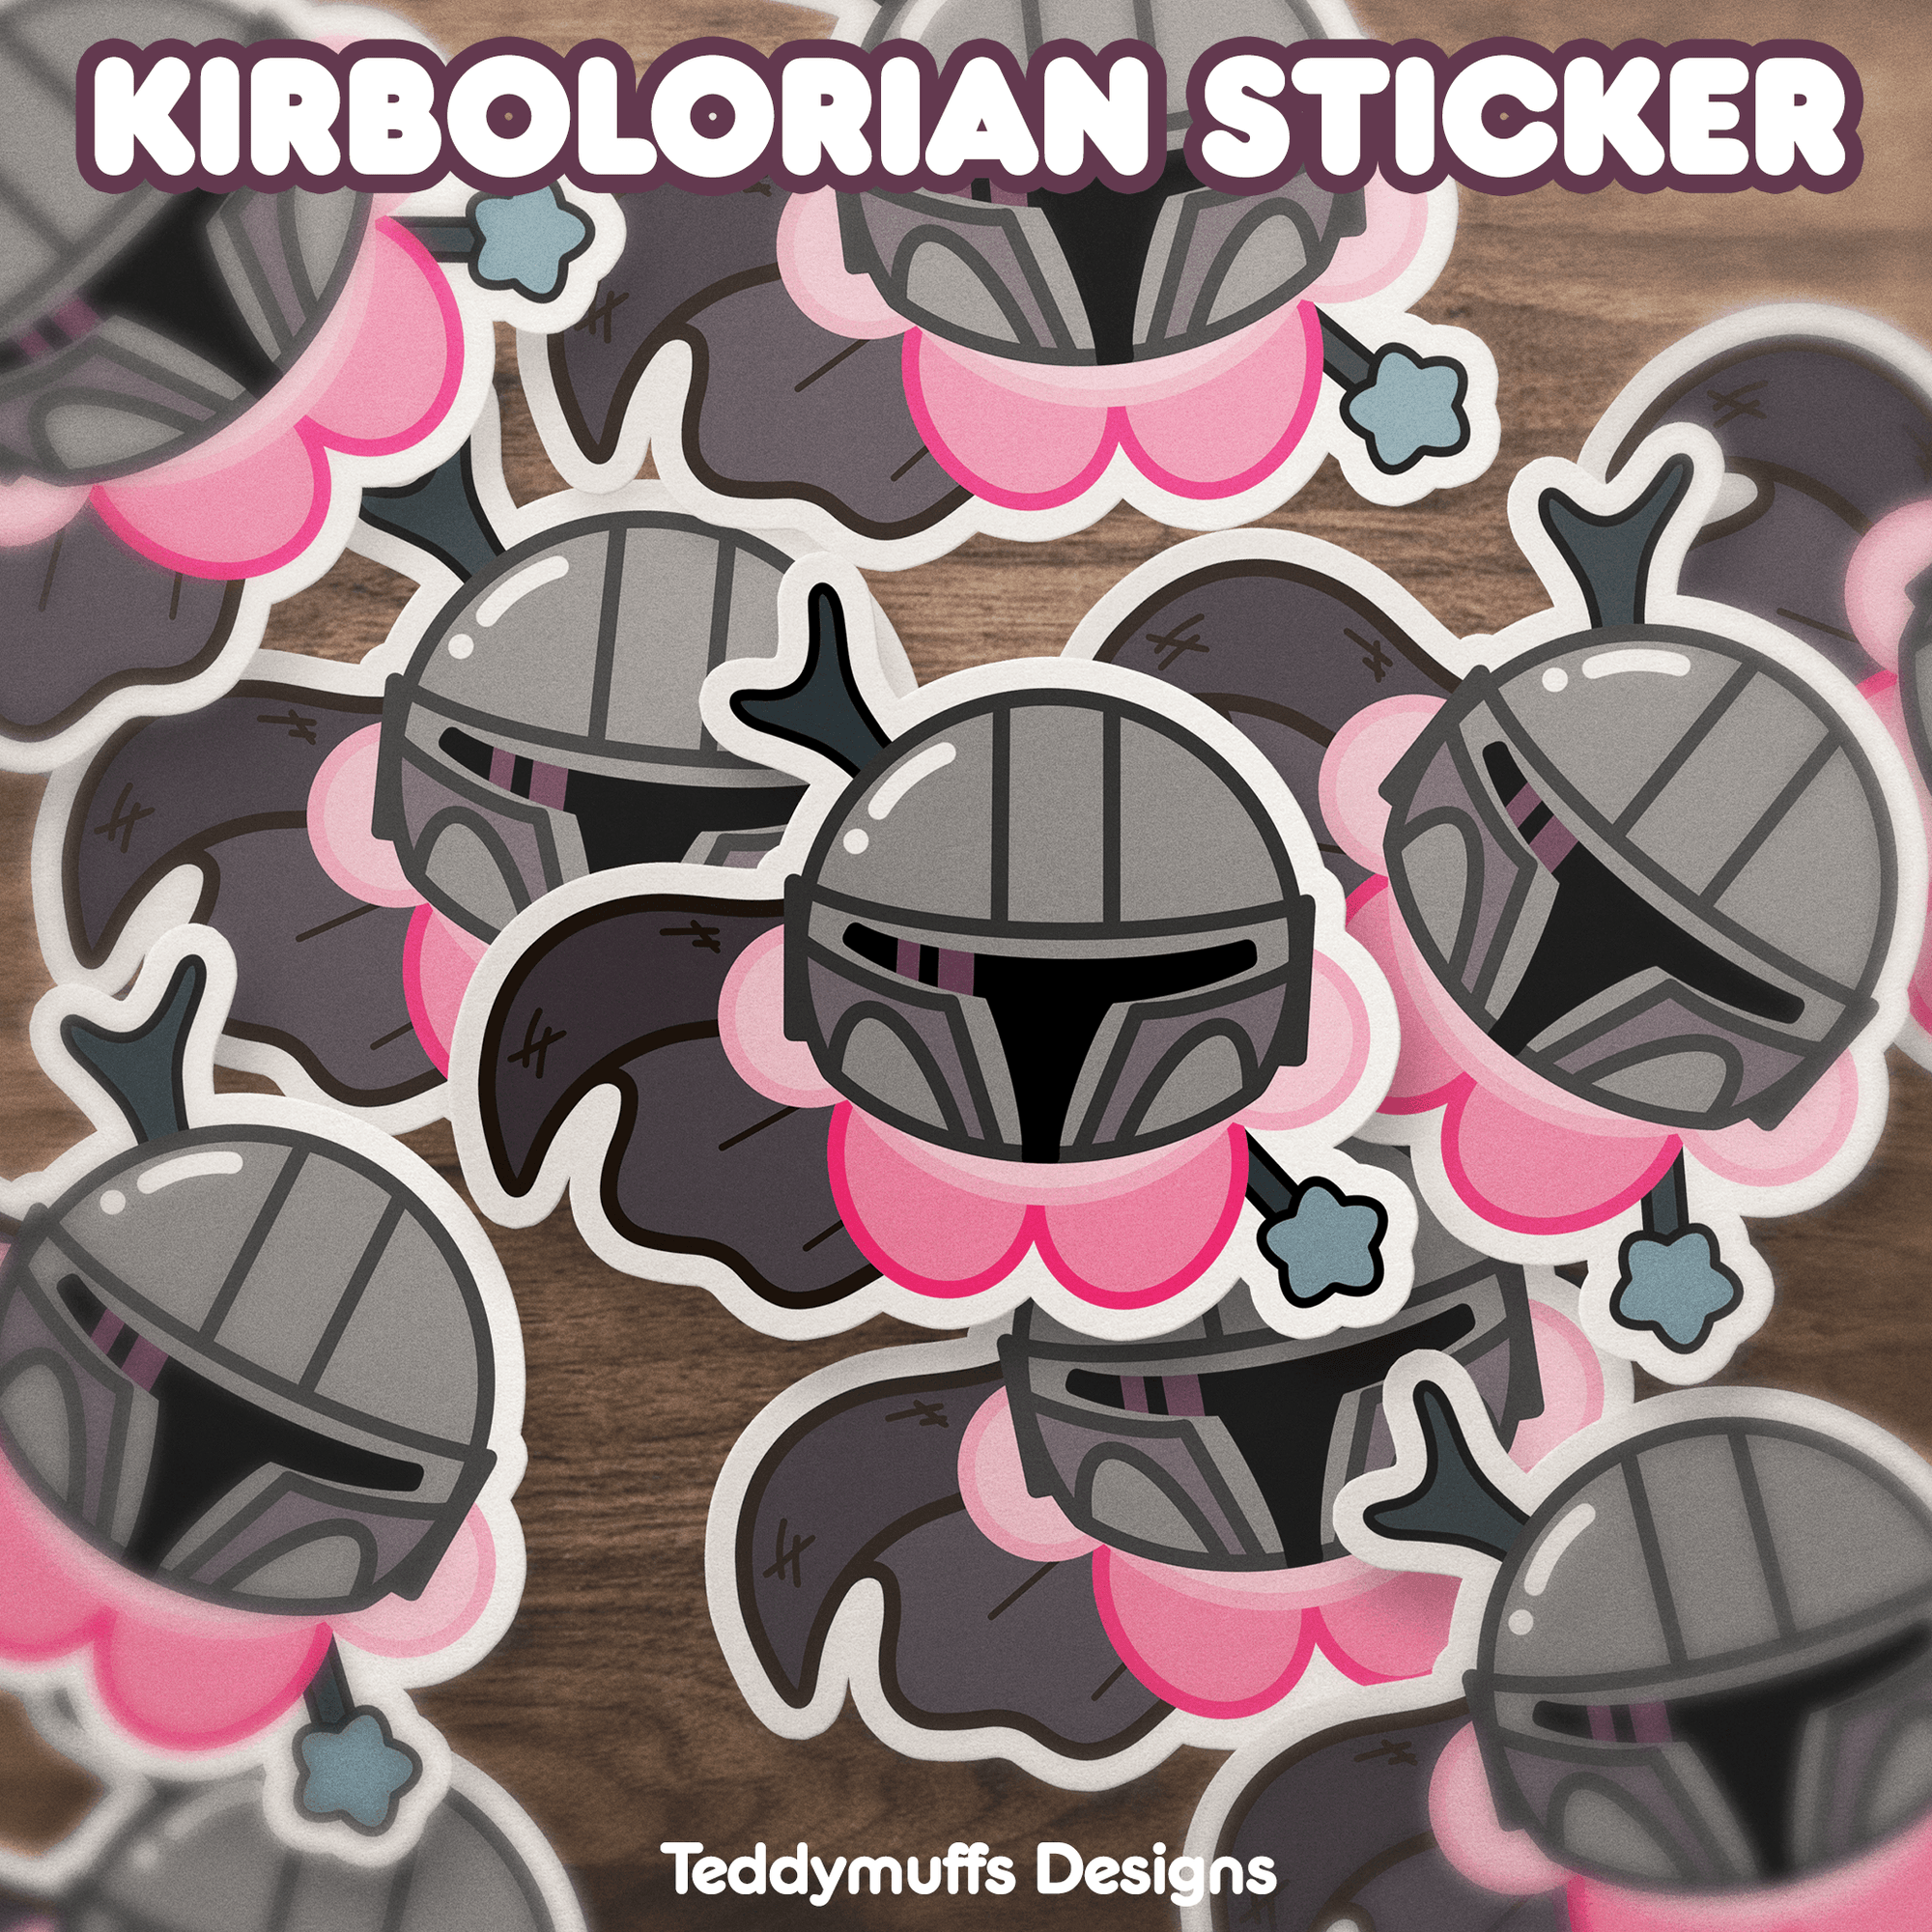 Mandalorian x Kirby Sticker - Teddymuffs Designs